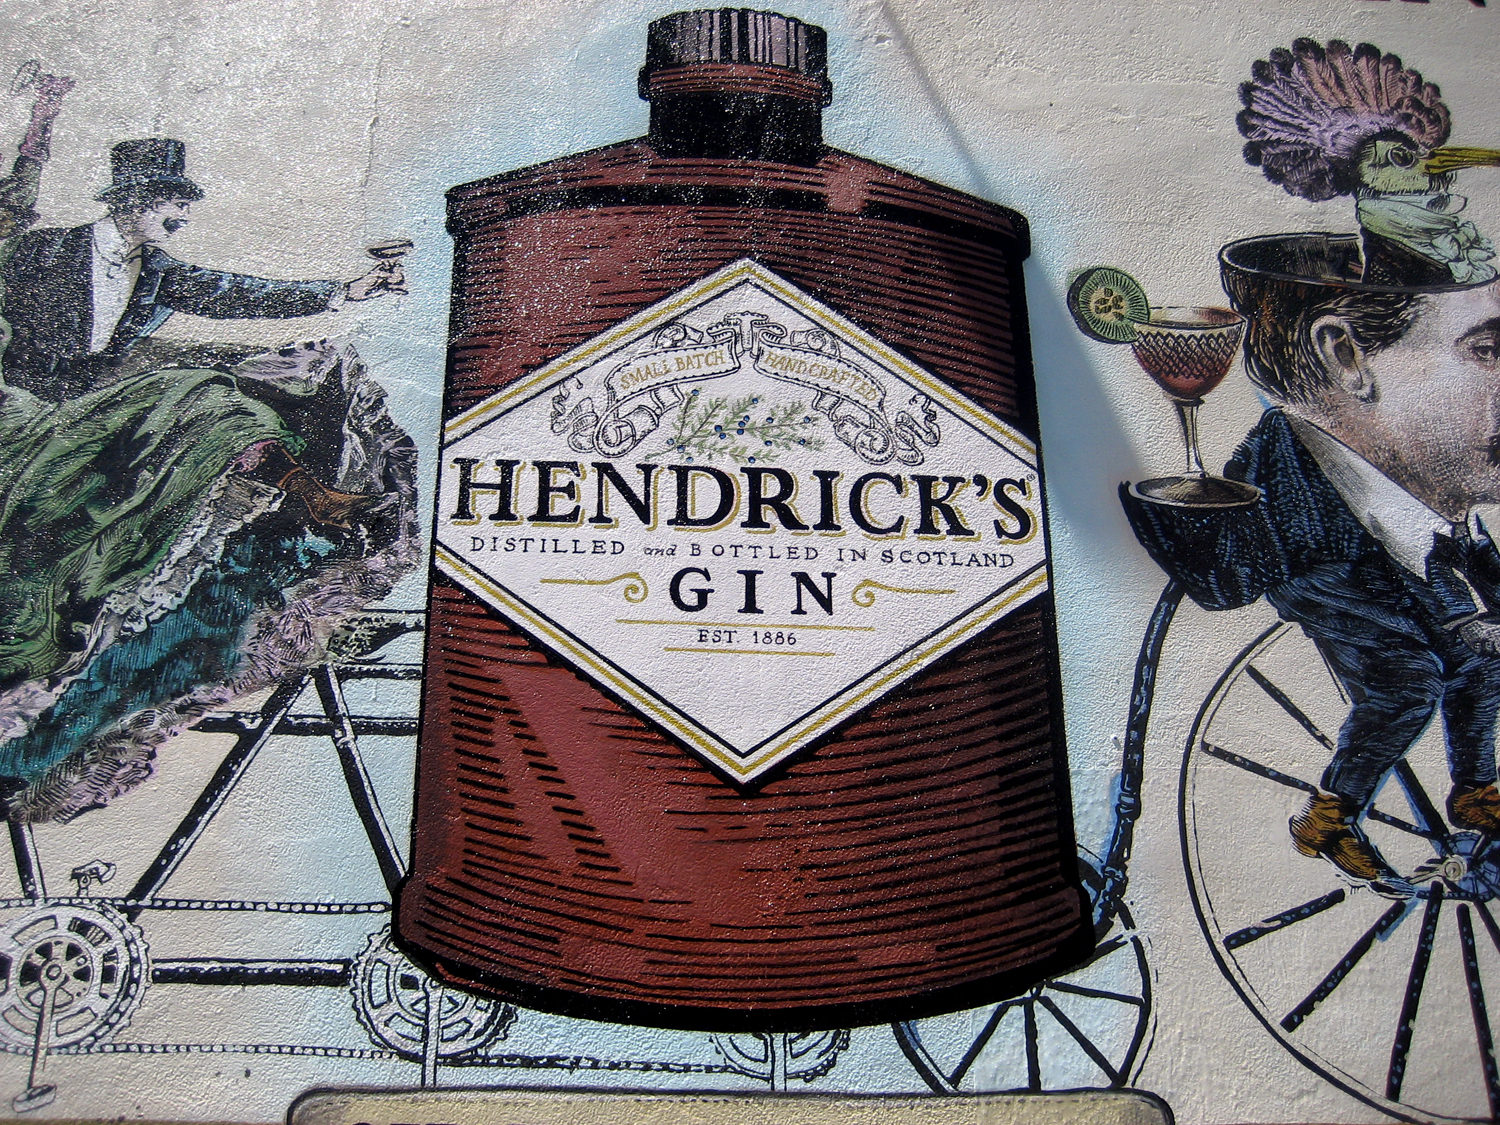 HENDRICK’S-ის კოქტეილის საღამო Holmes & Watson-ის შემოქმედებითი გუნდისთვის